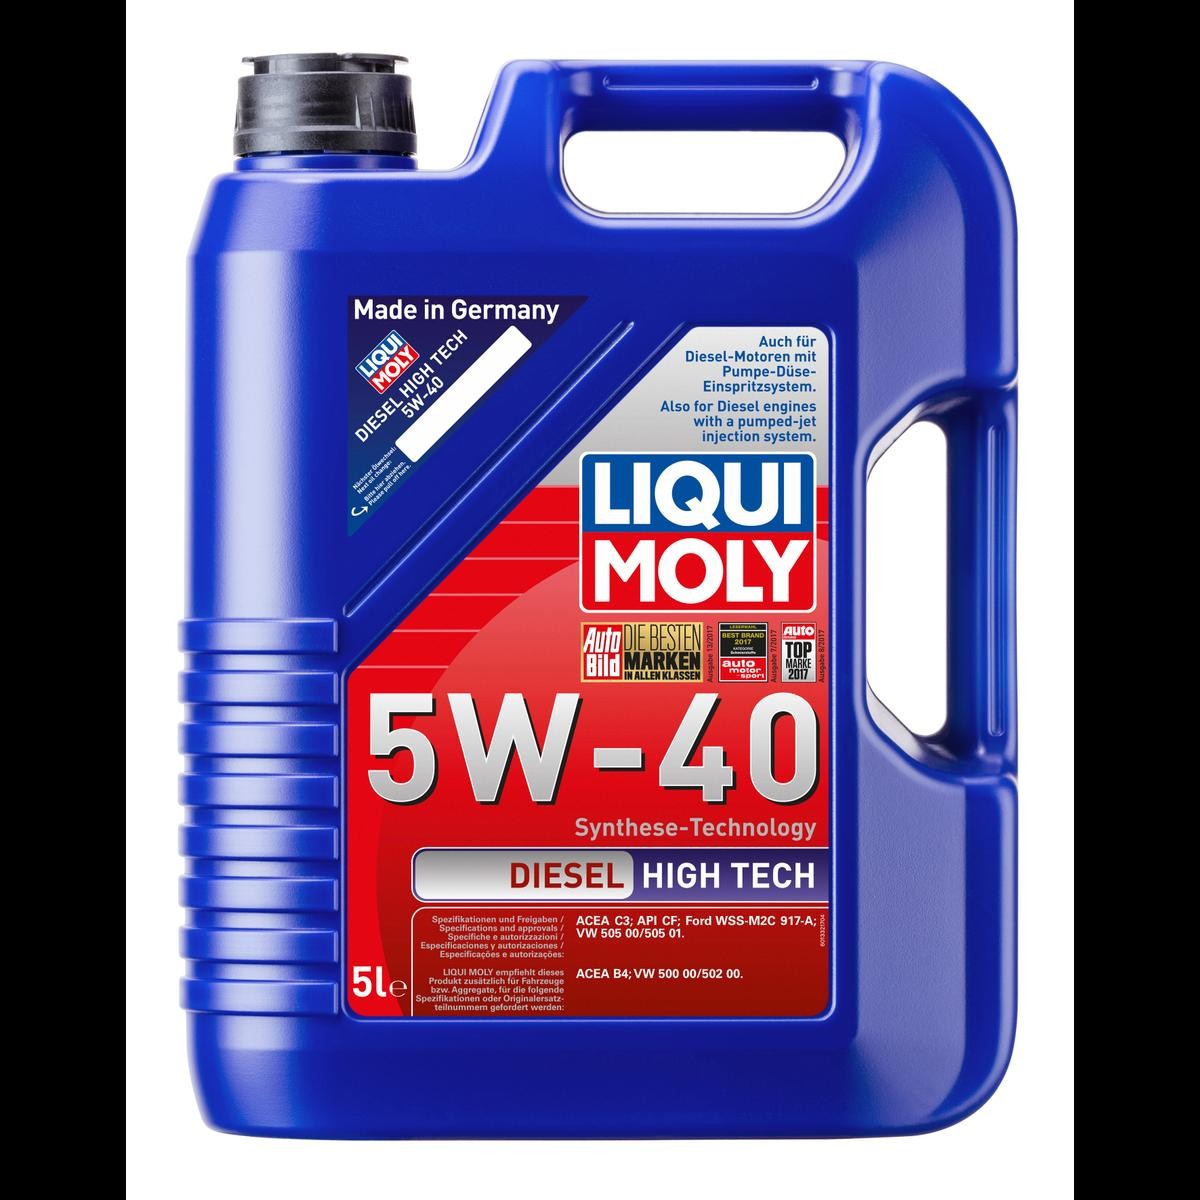 Car oil LIQUI MOLY 5W-40, 5l, Part Synthetic Oil longlife 1332